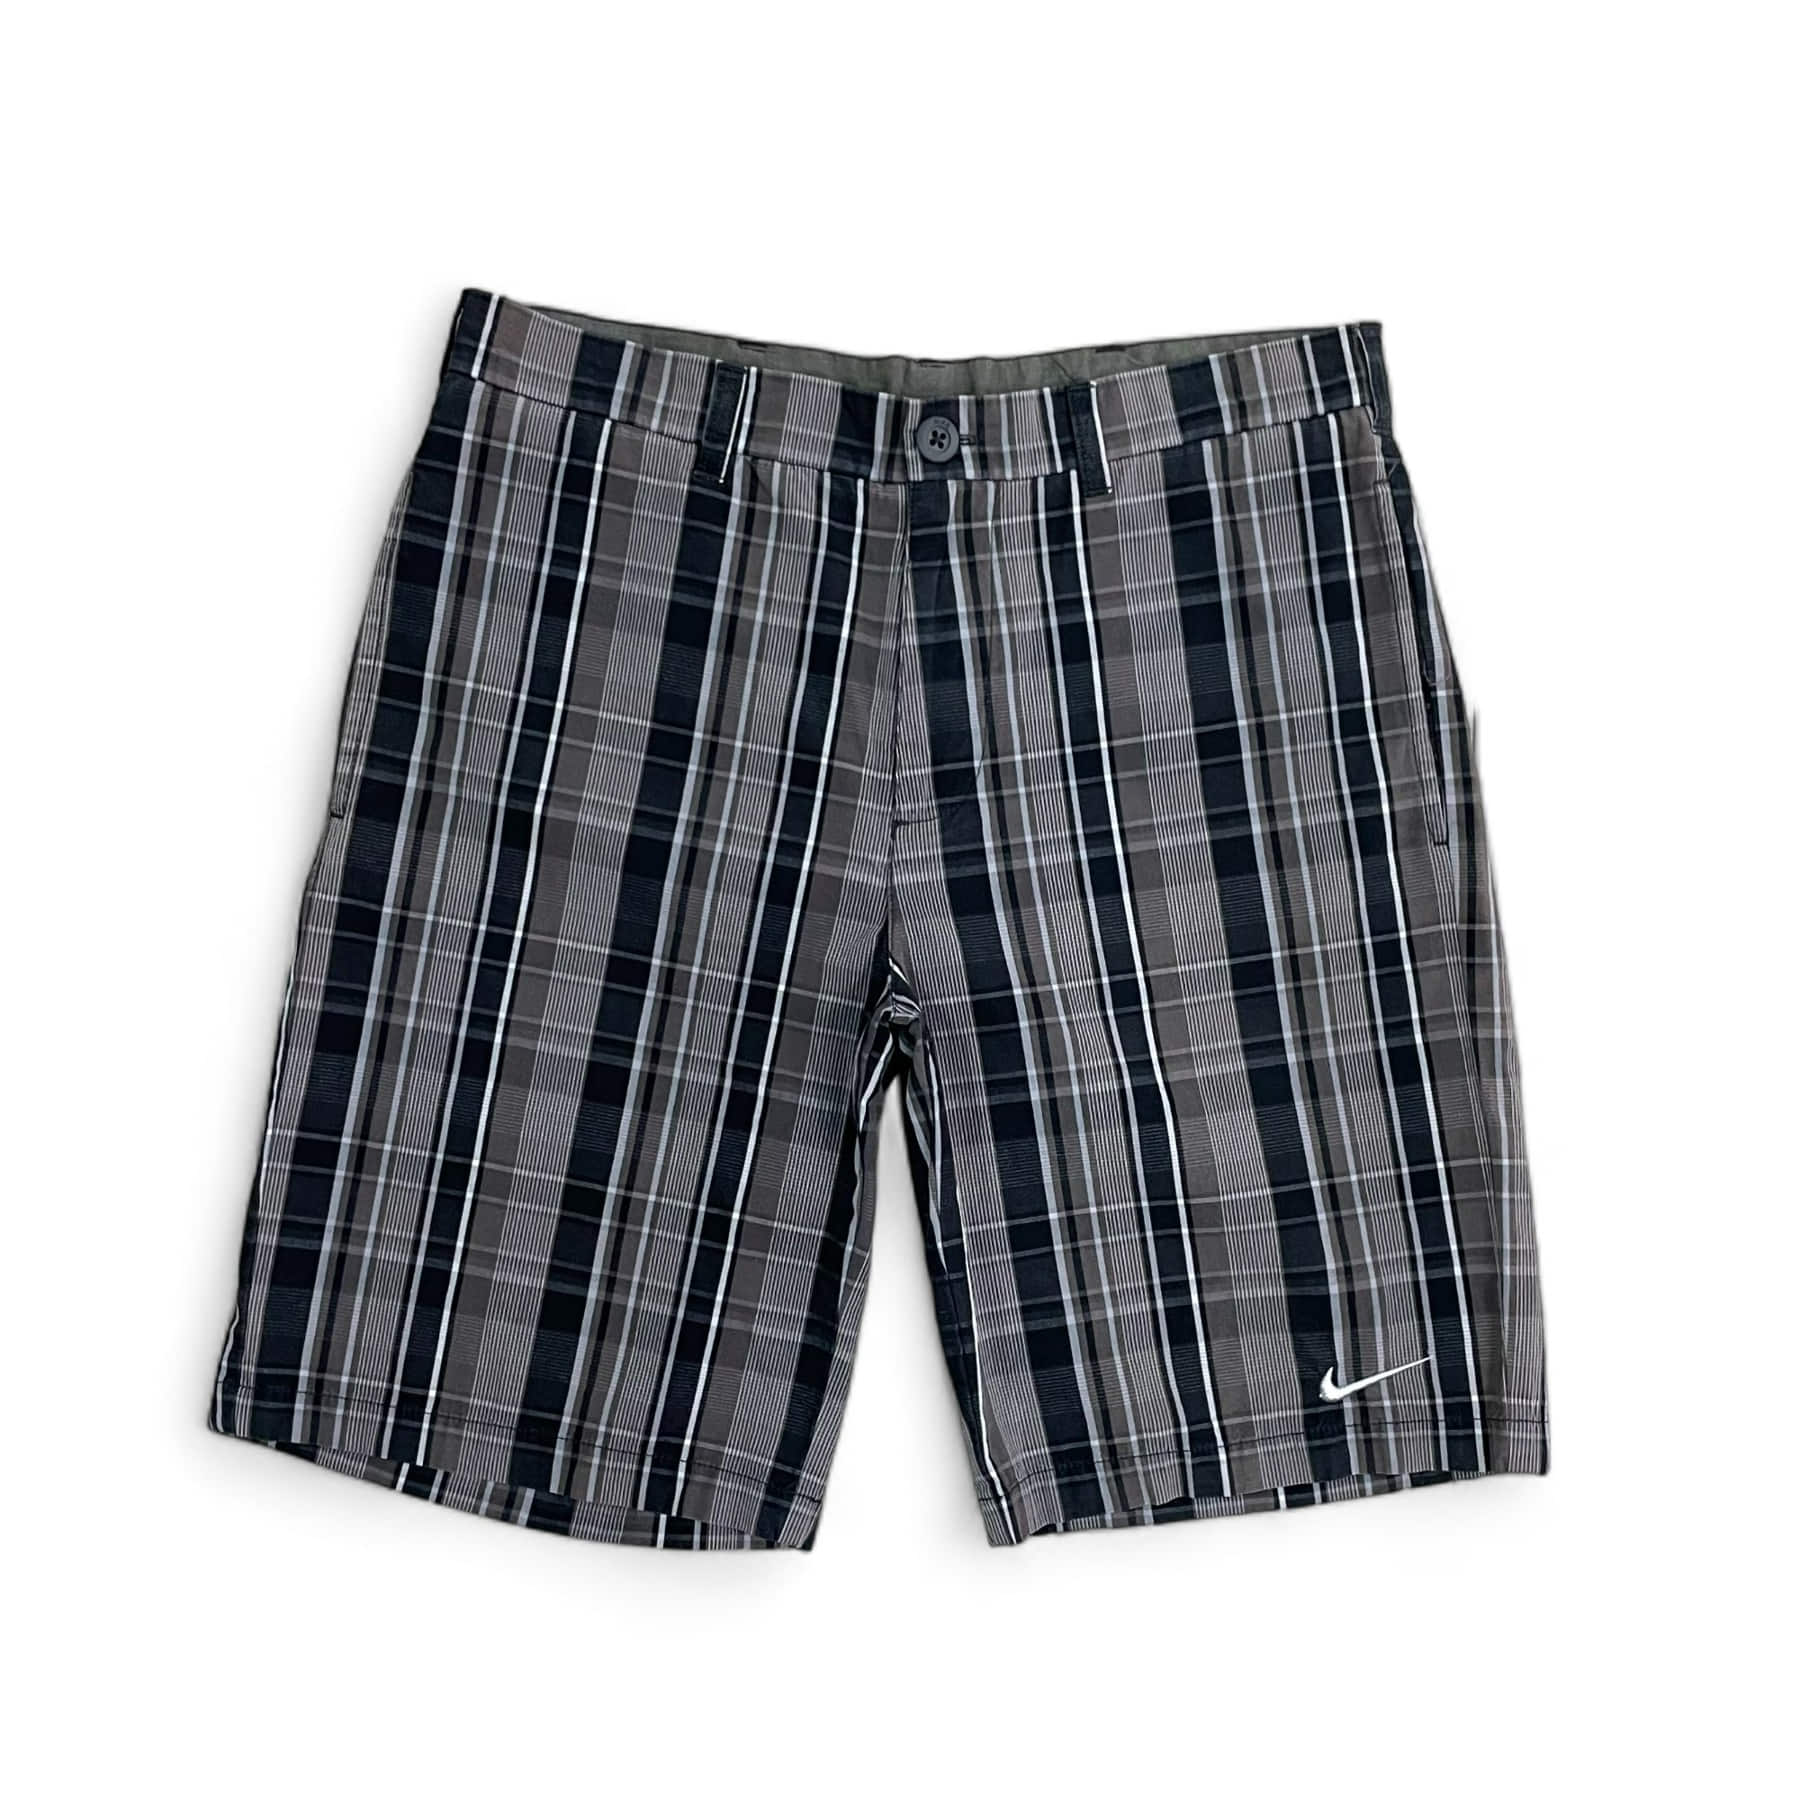 2011 NIKE Cotton Shorts - 32inch